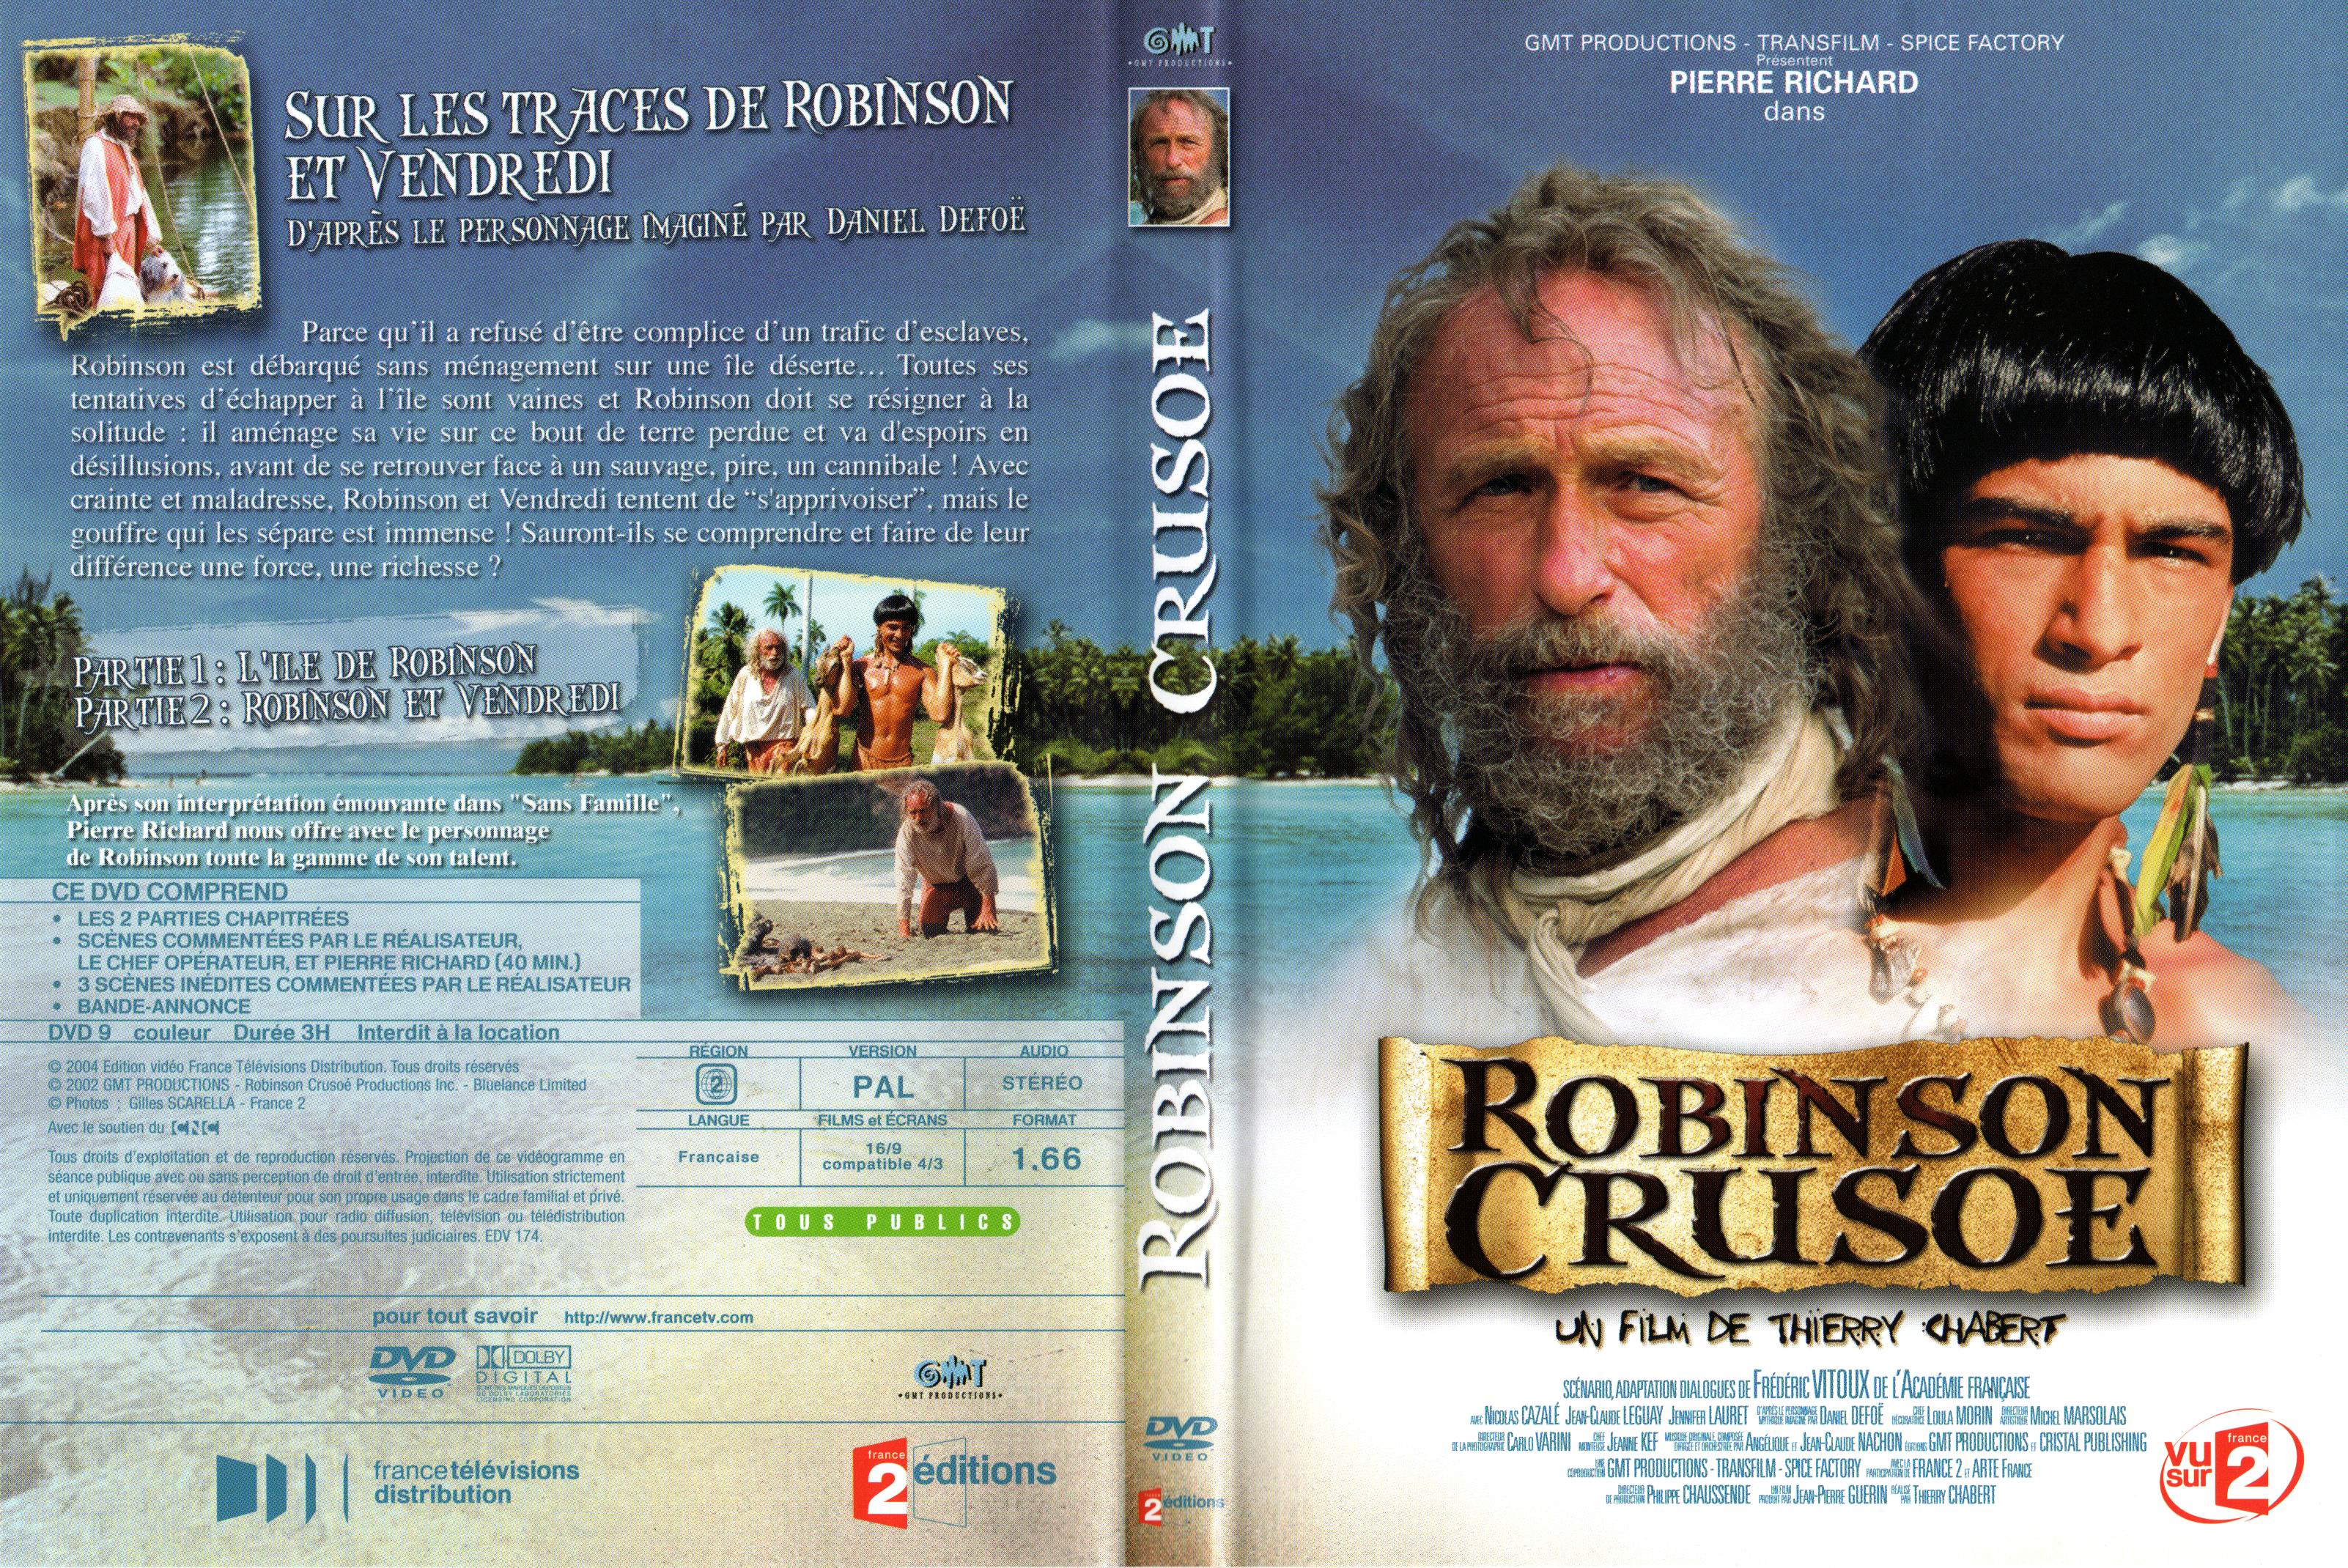 Jaquette DVD Robinson Crusoe (Pierre Richard)